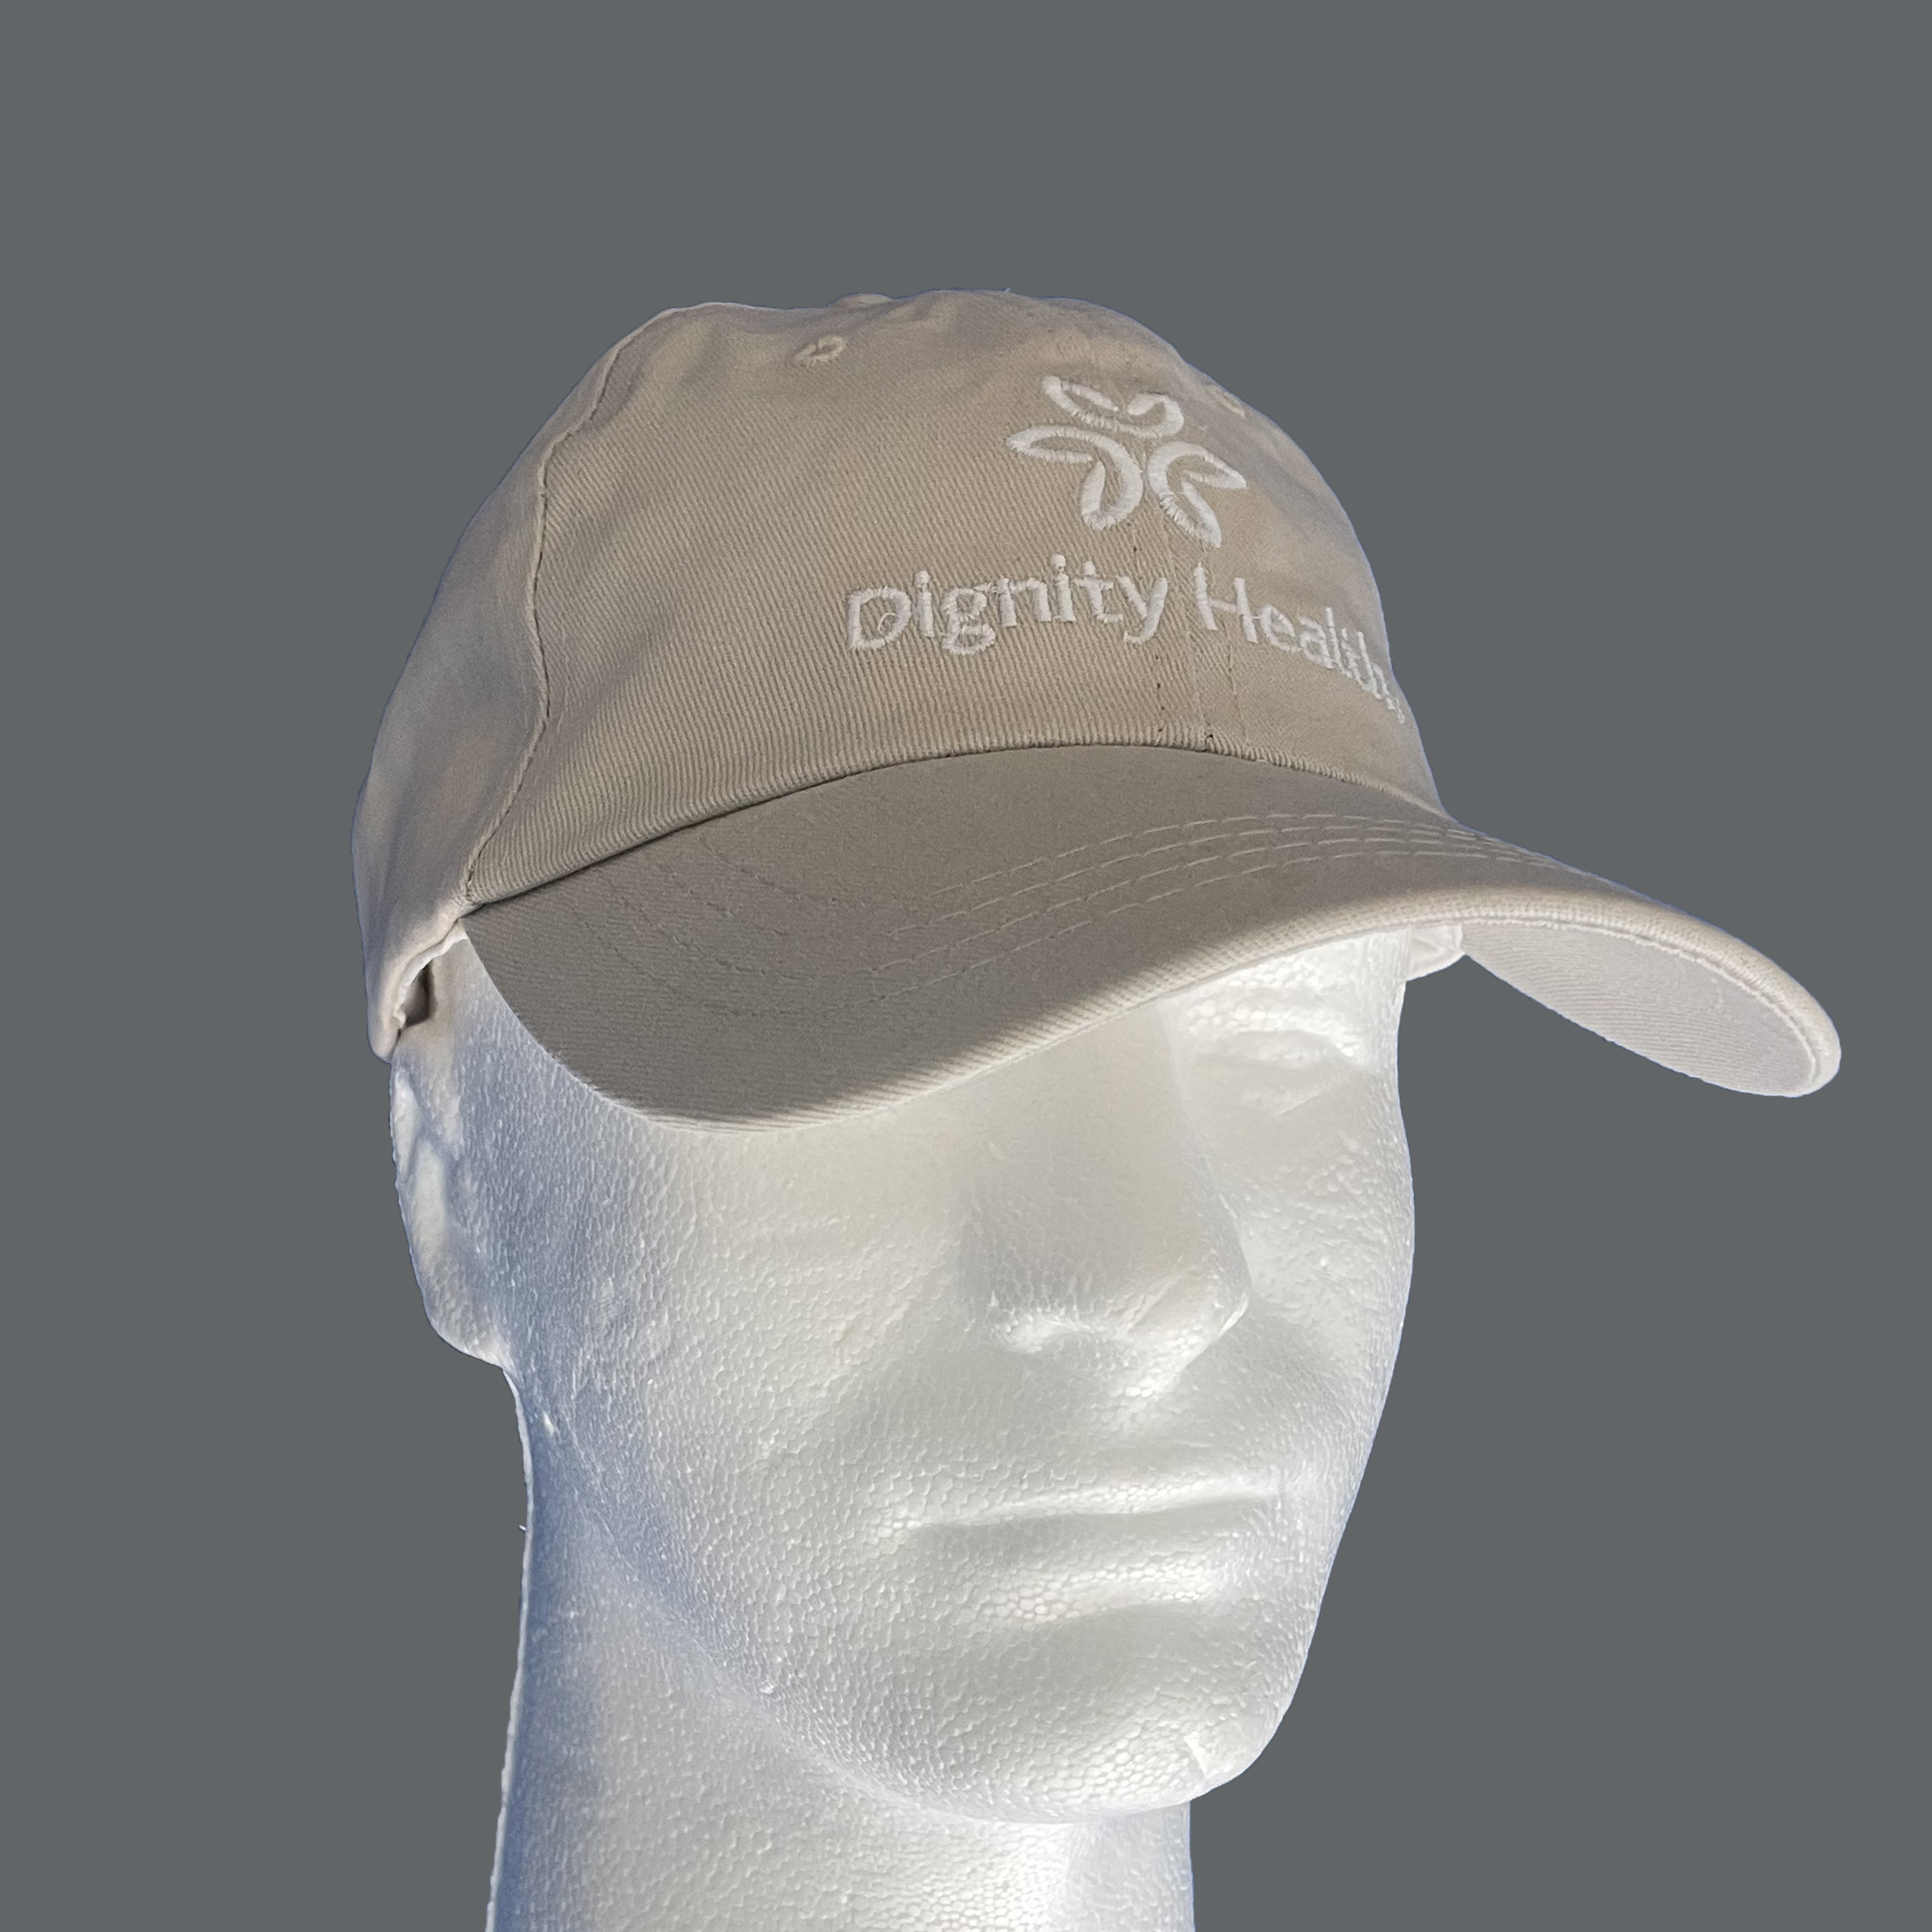 Dignity Health branded tan baseball cap